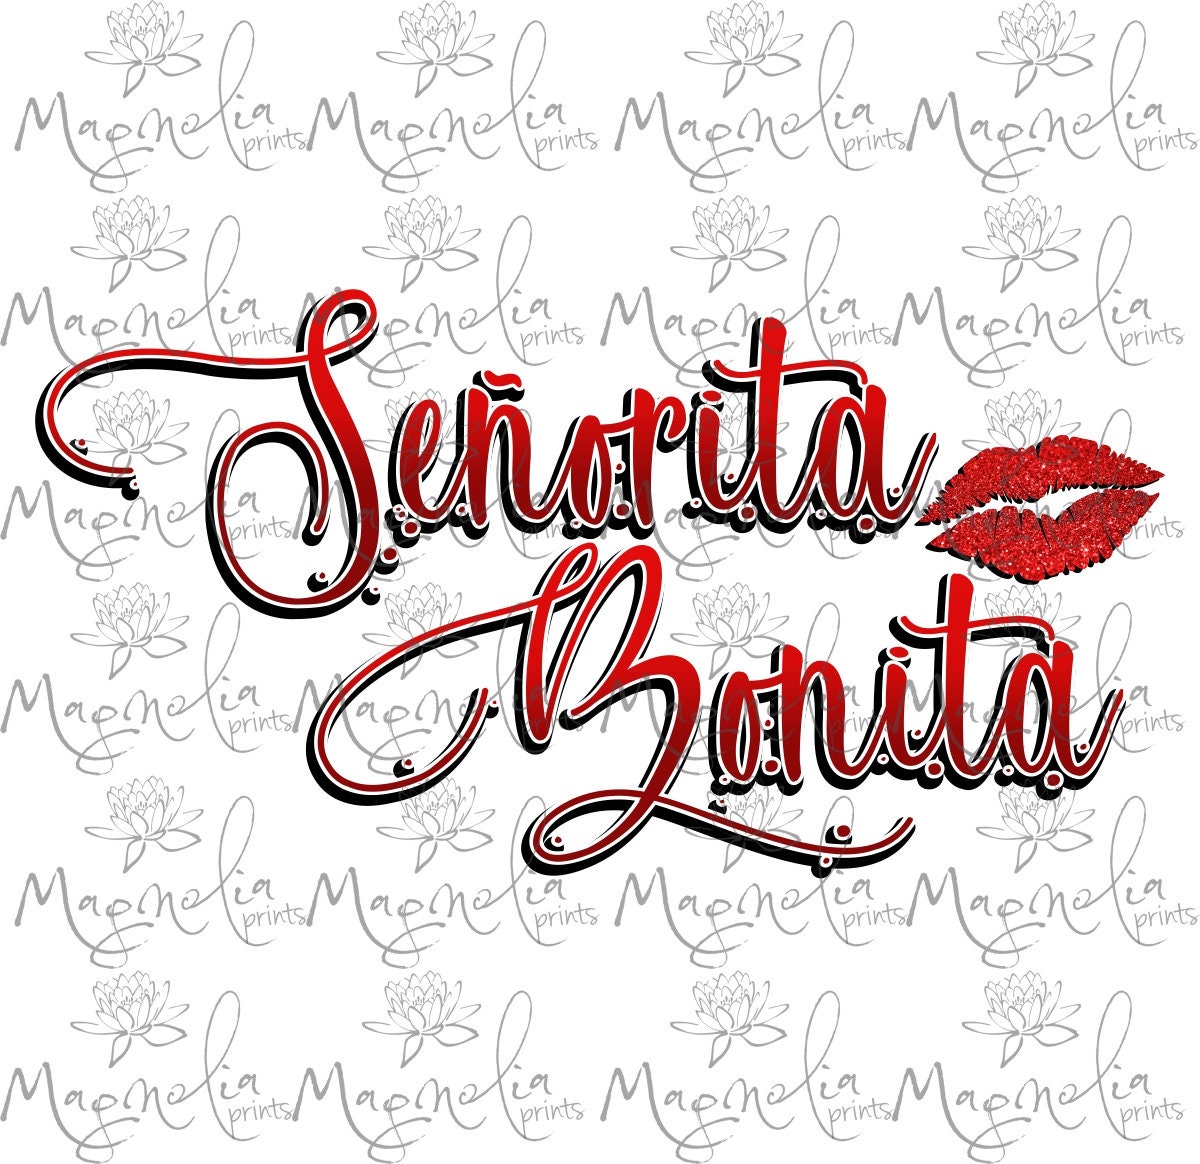 Bonita!✨” srry don't know og audio 